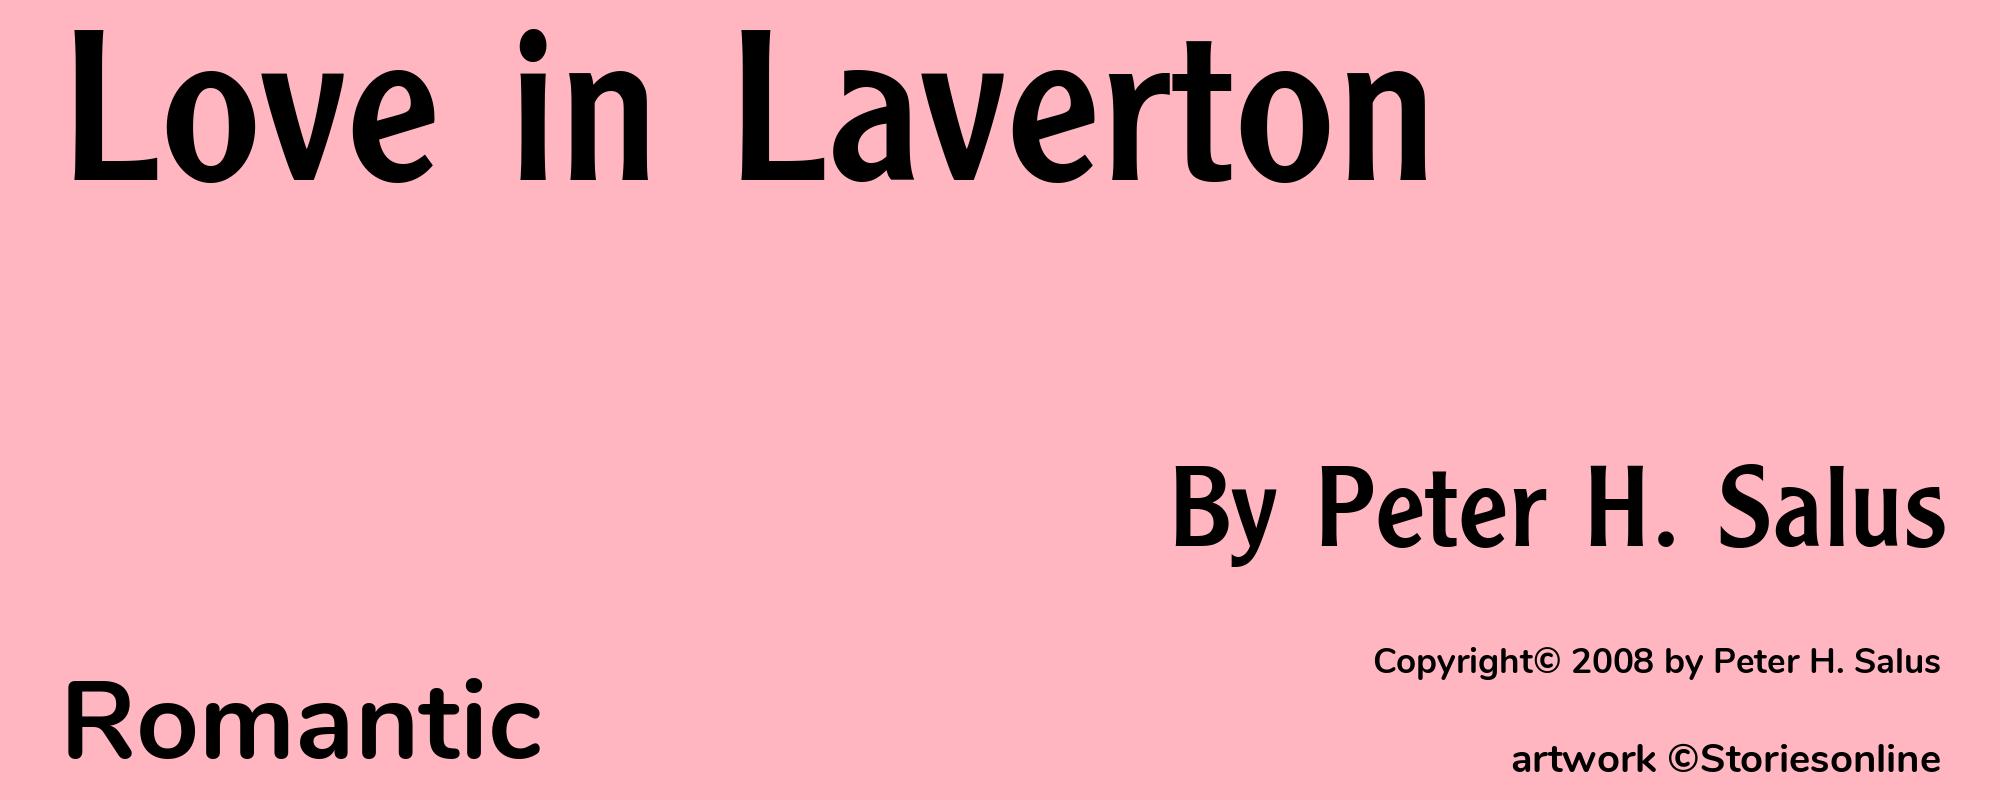 Love in Laverton - Cover